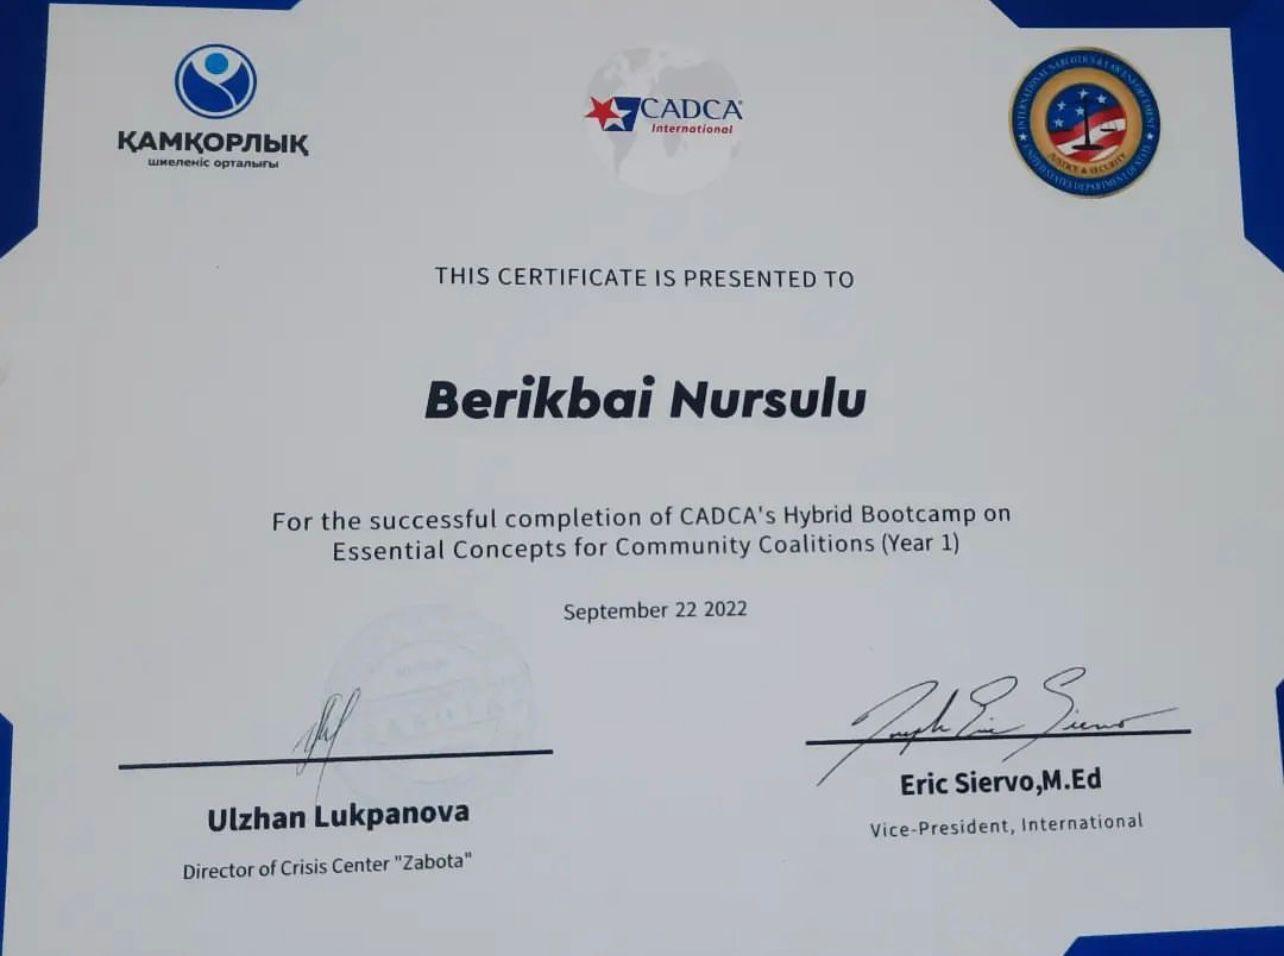 This certificate is presented to Berikbai Nursulu